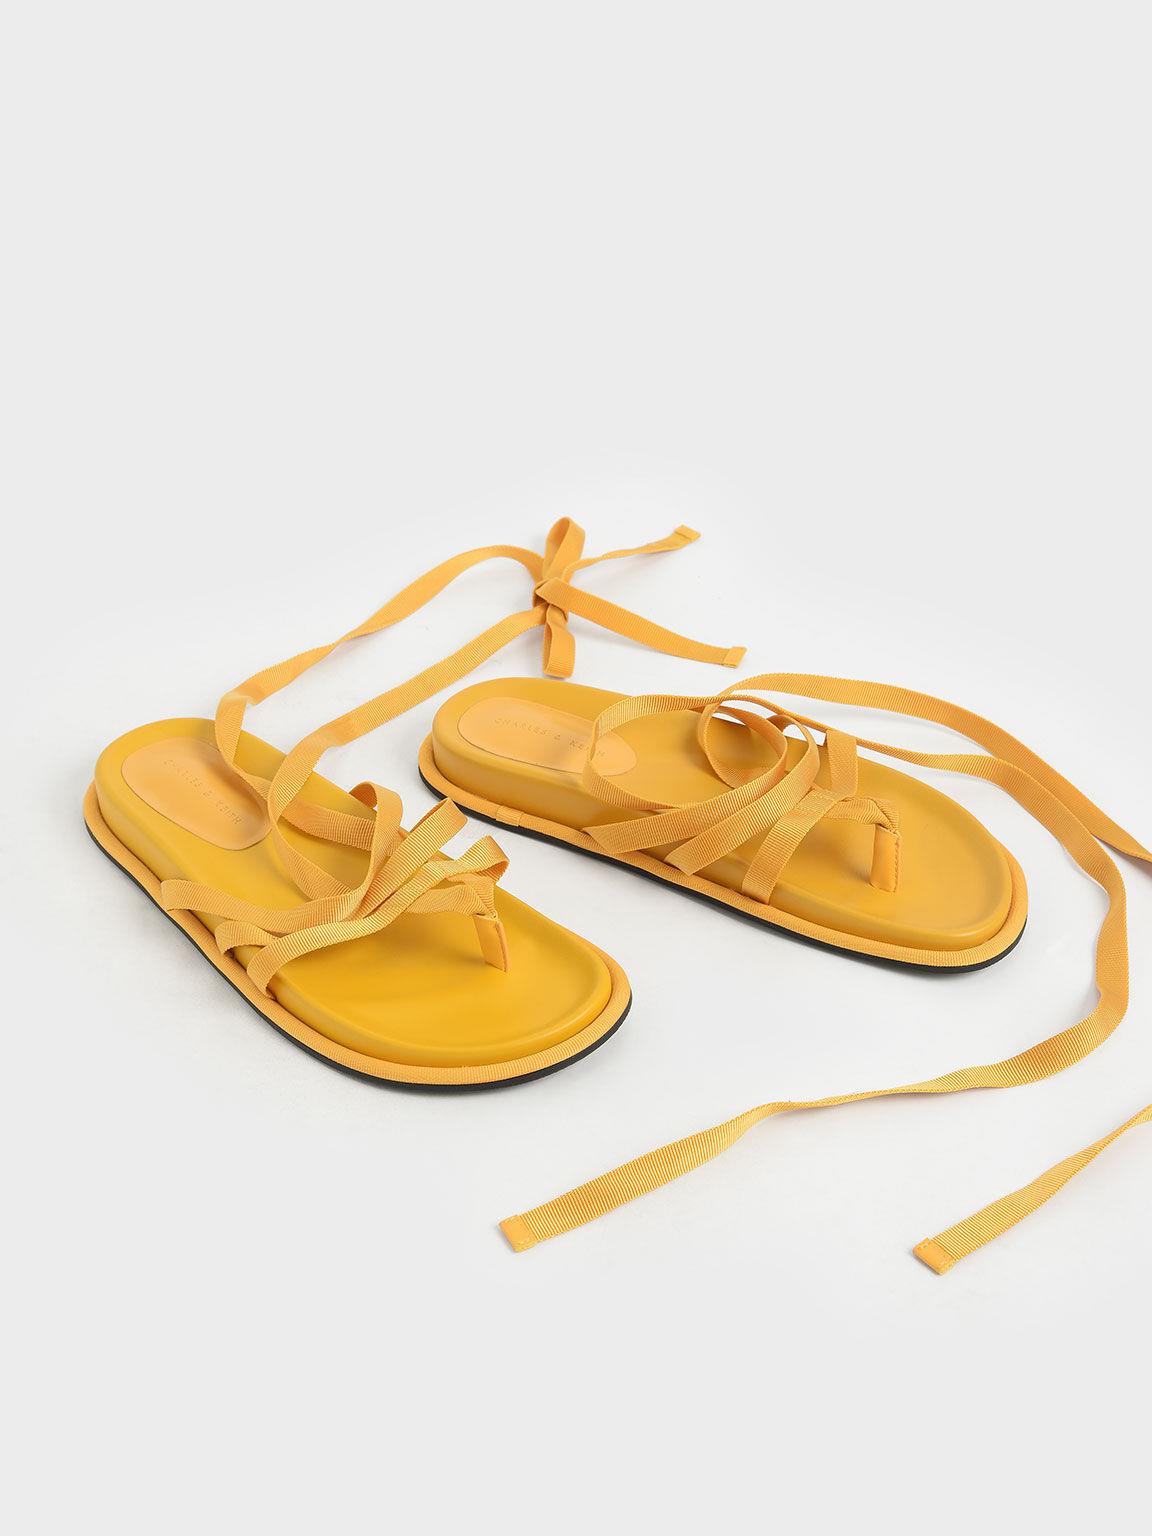 Sandalias planas amarillas anudadas al tobillo, de Charleskeith